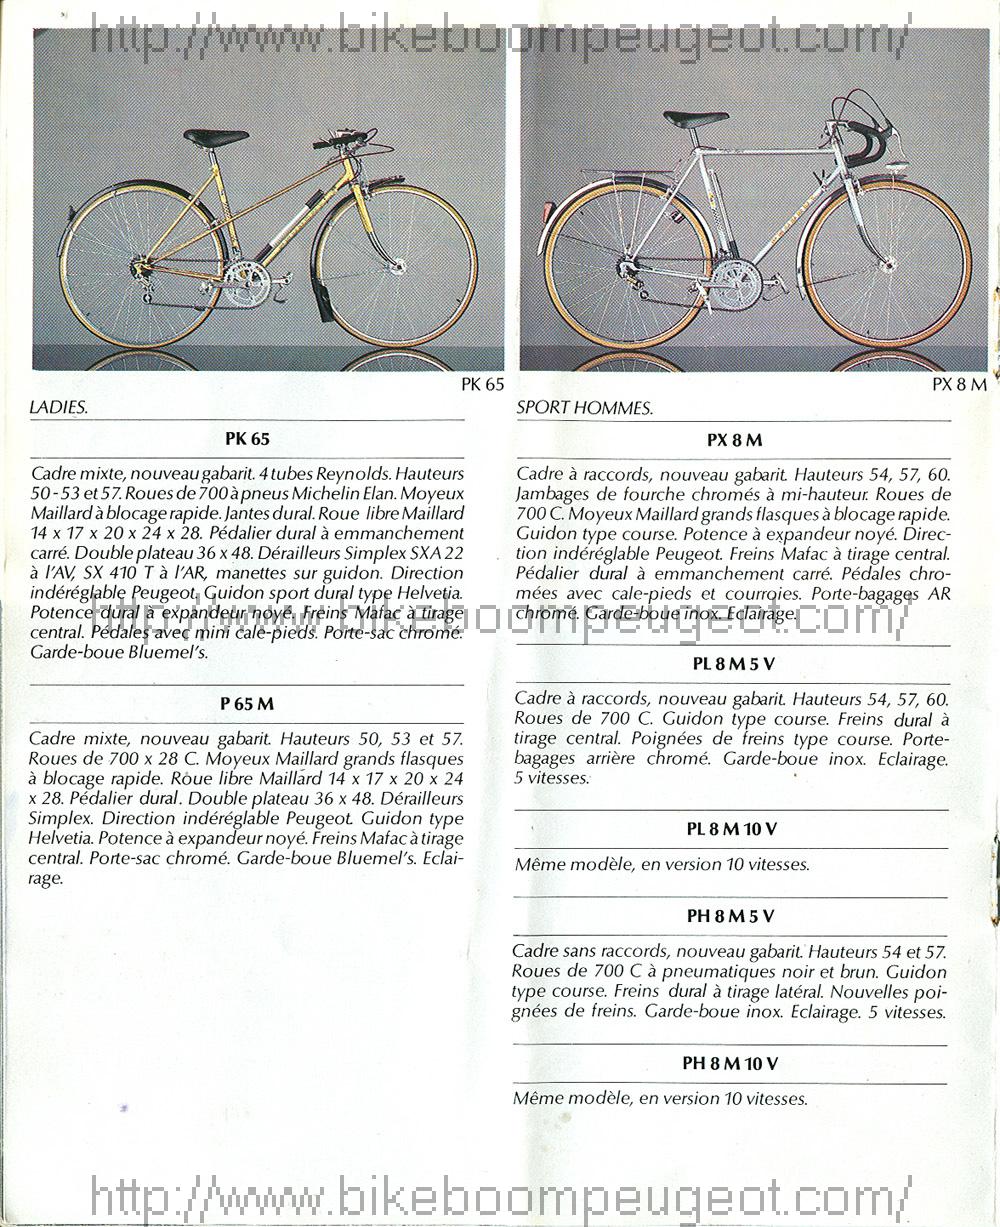 velo - Identification vélo Peugeot Record du Monde Peugeot_1979_French_Full_Brochure_Page11_BikeBoomPeugeot